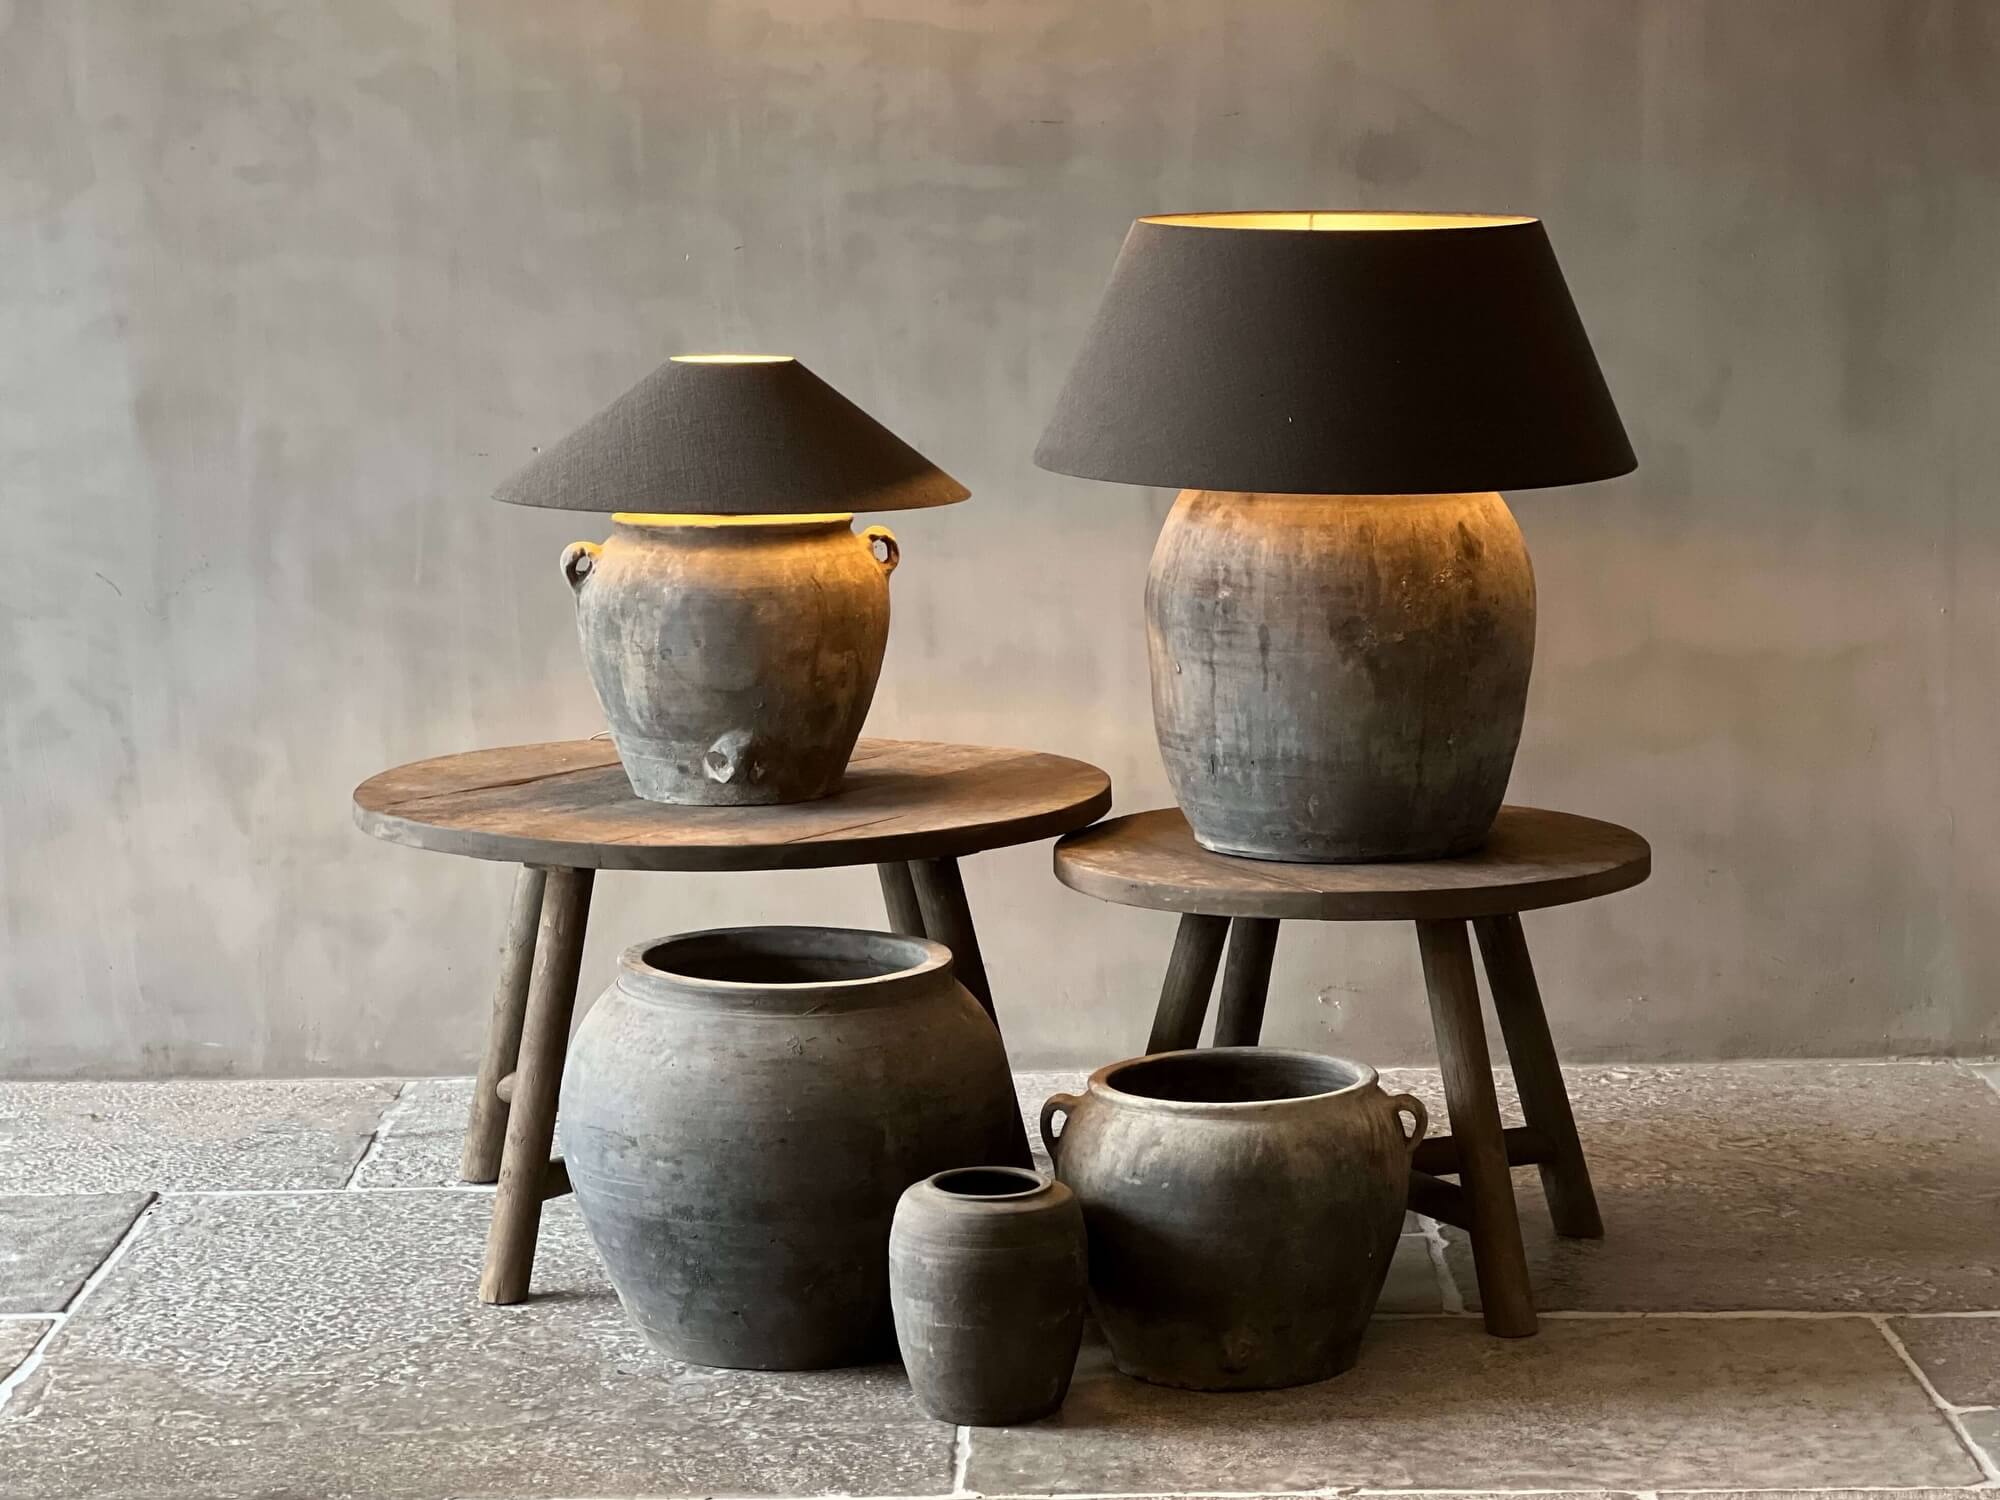 Chinese terracotta lampen